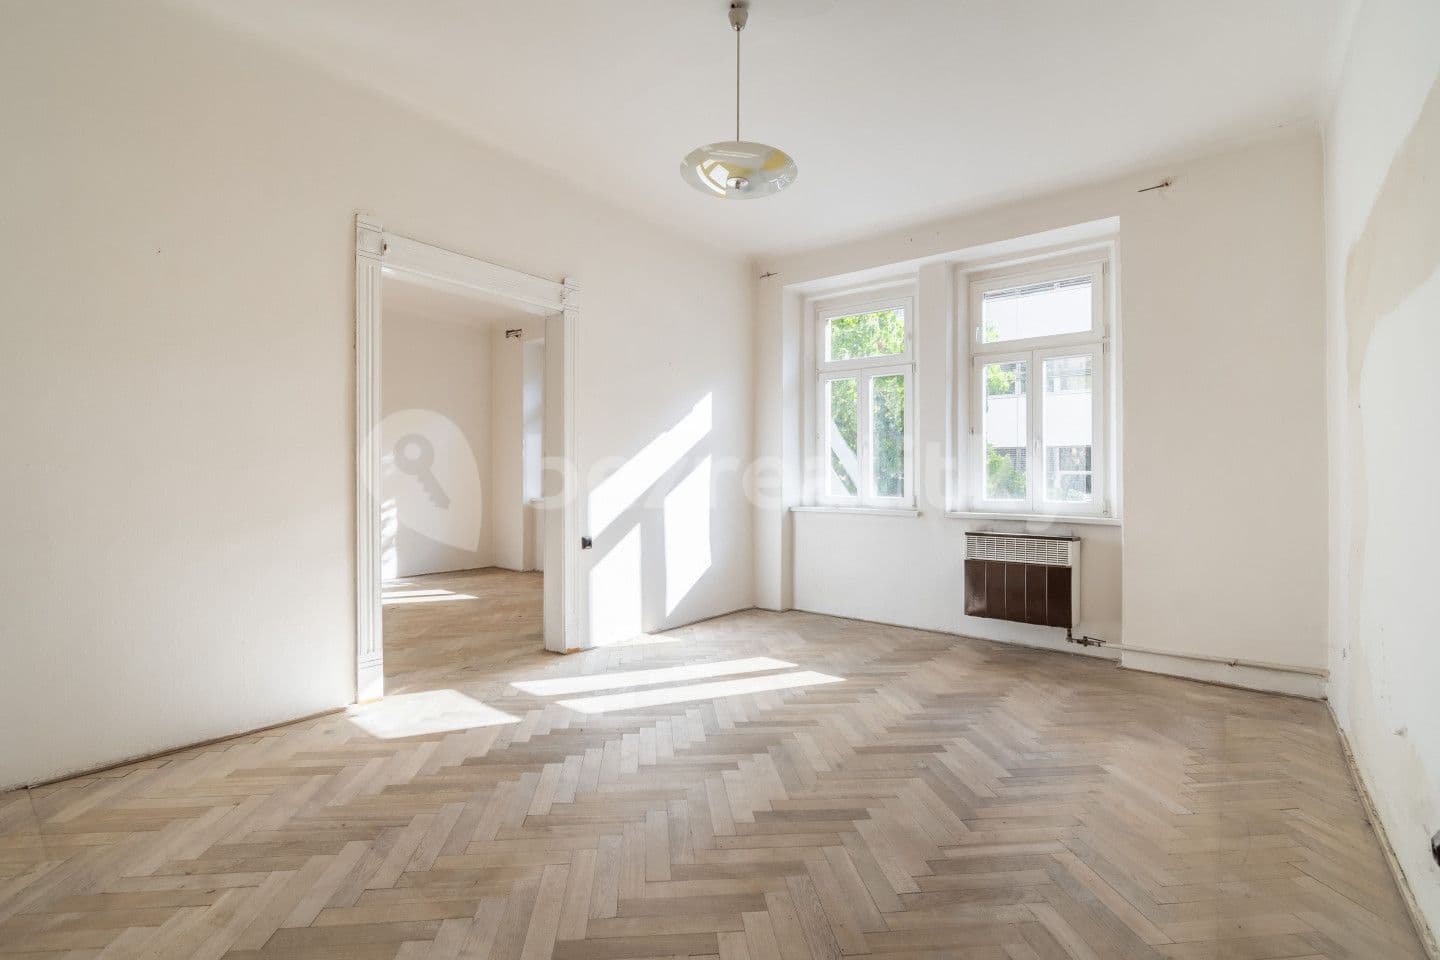 2 bedroom flat for sale, 76 m², Kováků, Prague, Prague